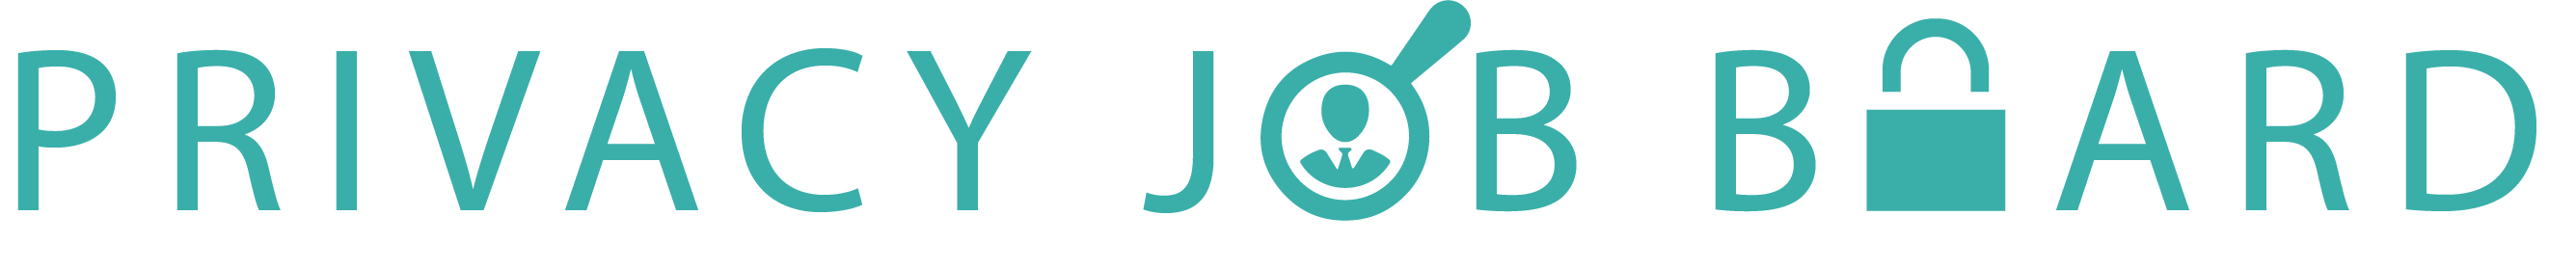 Privacy Job Board Logo